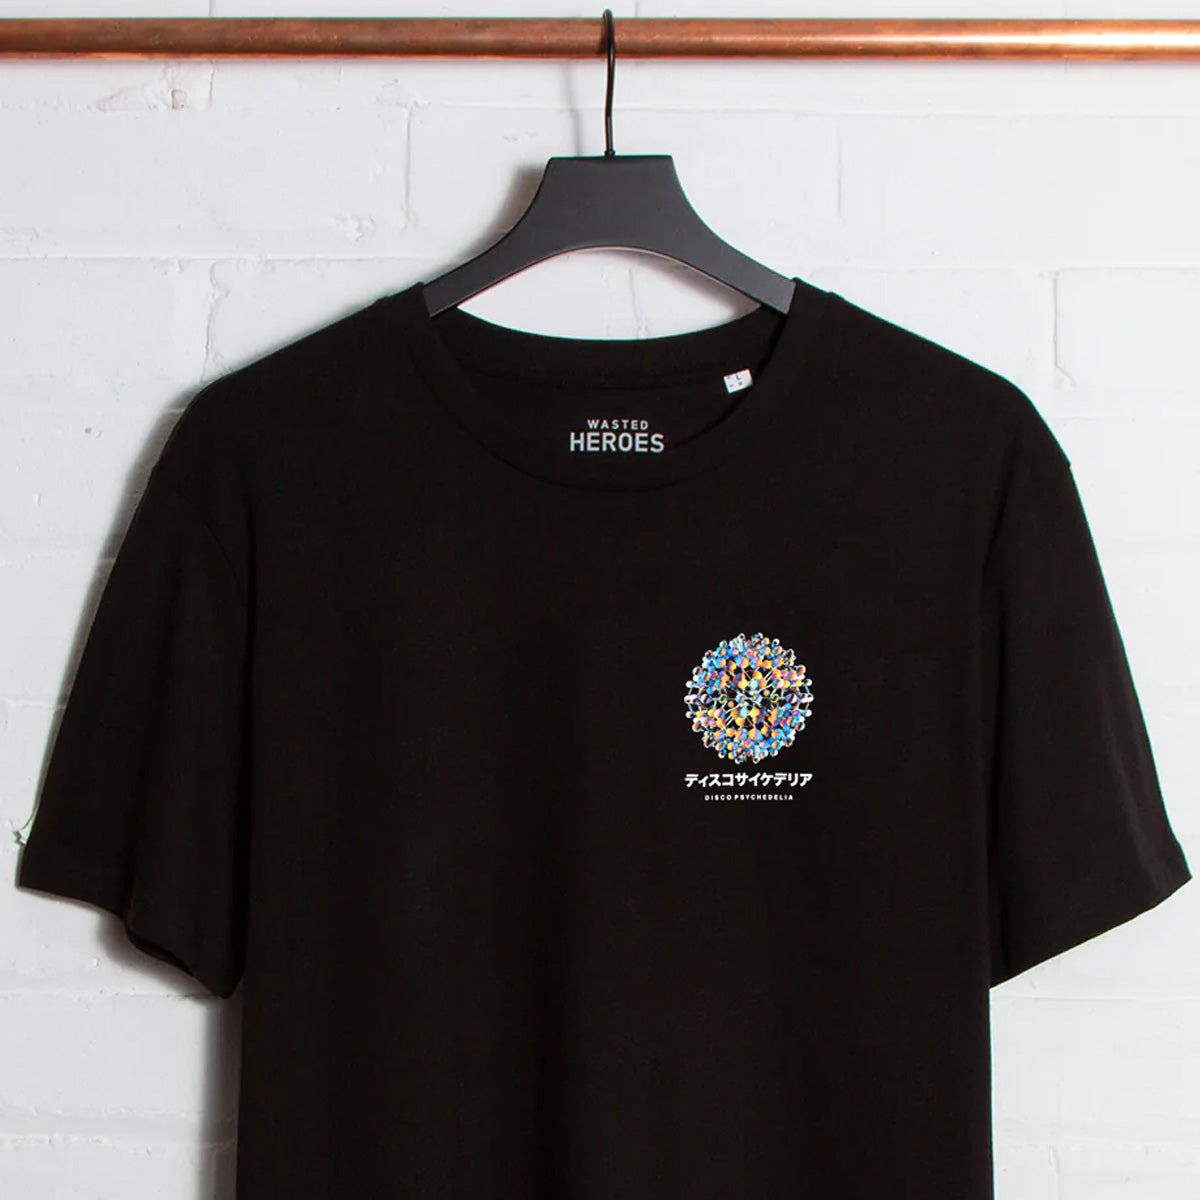 Crest Orb 002 - Tshirt - Black